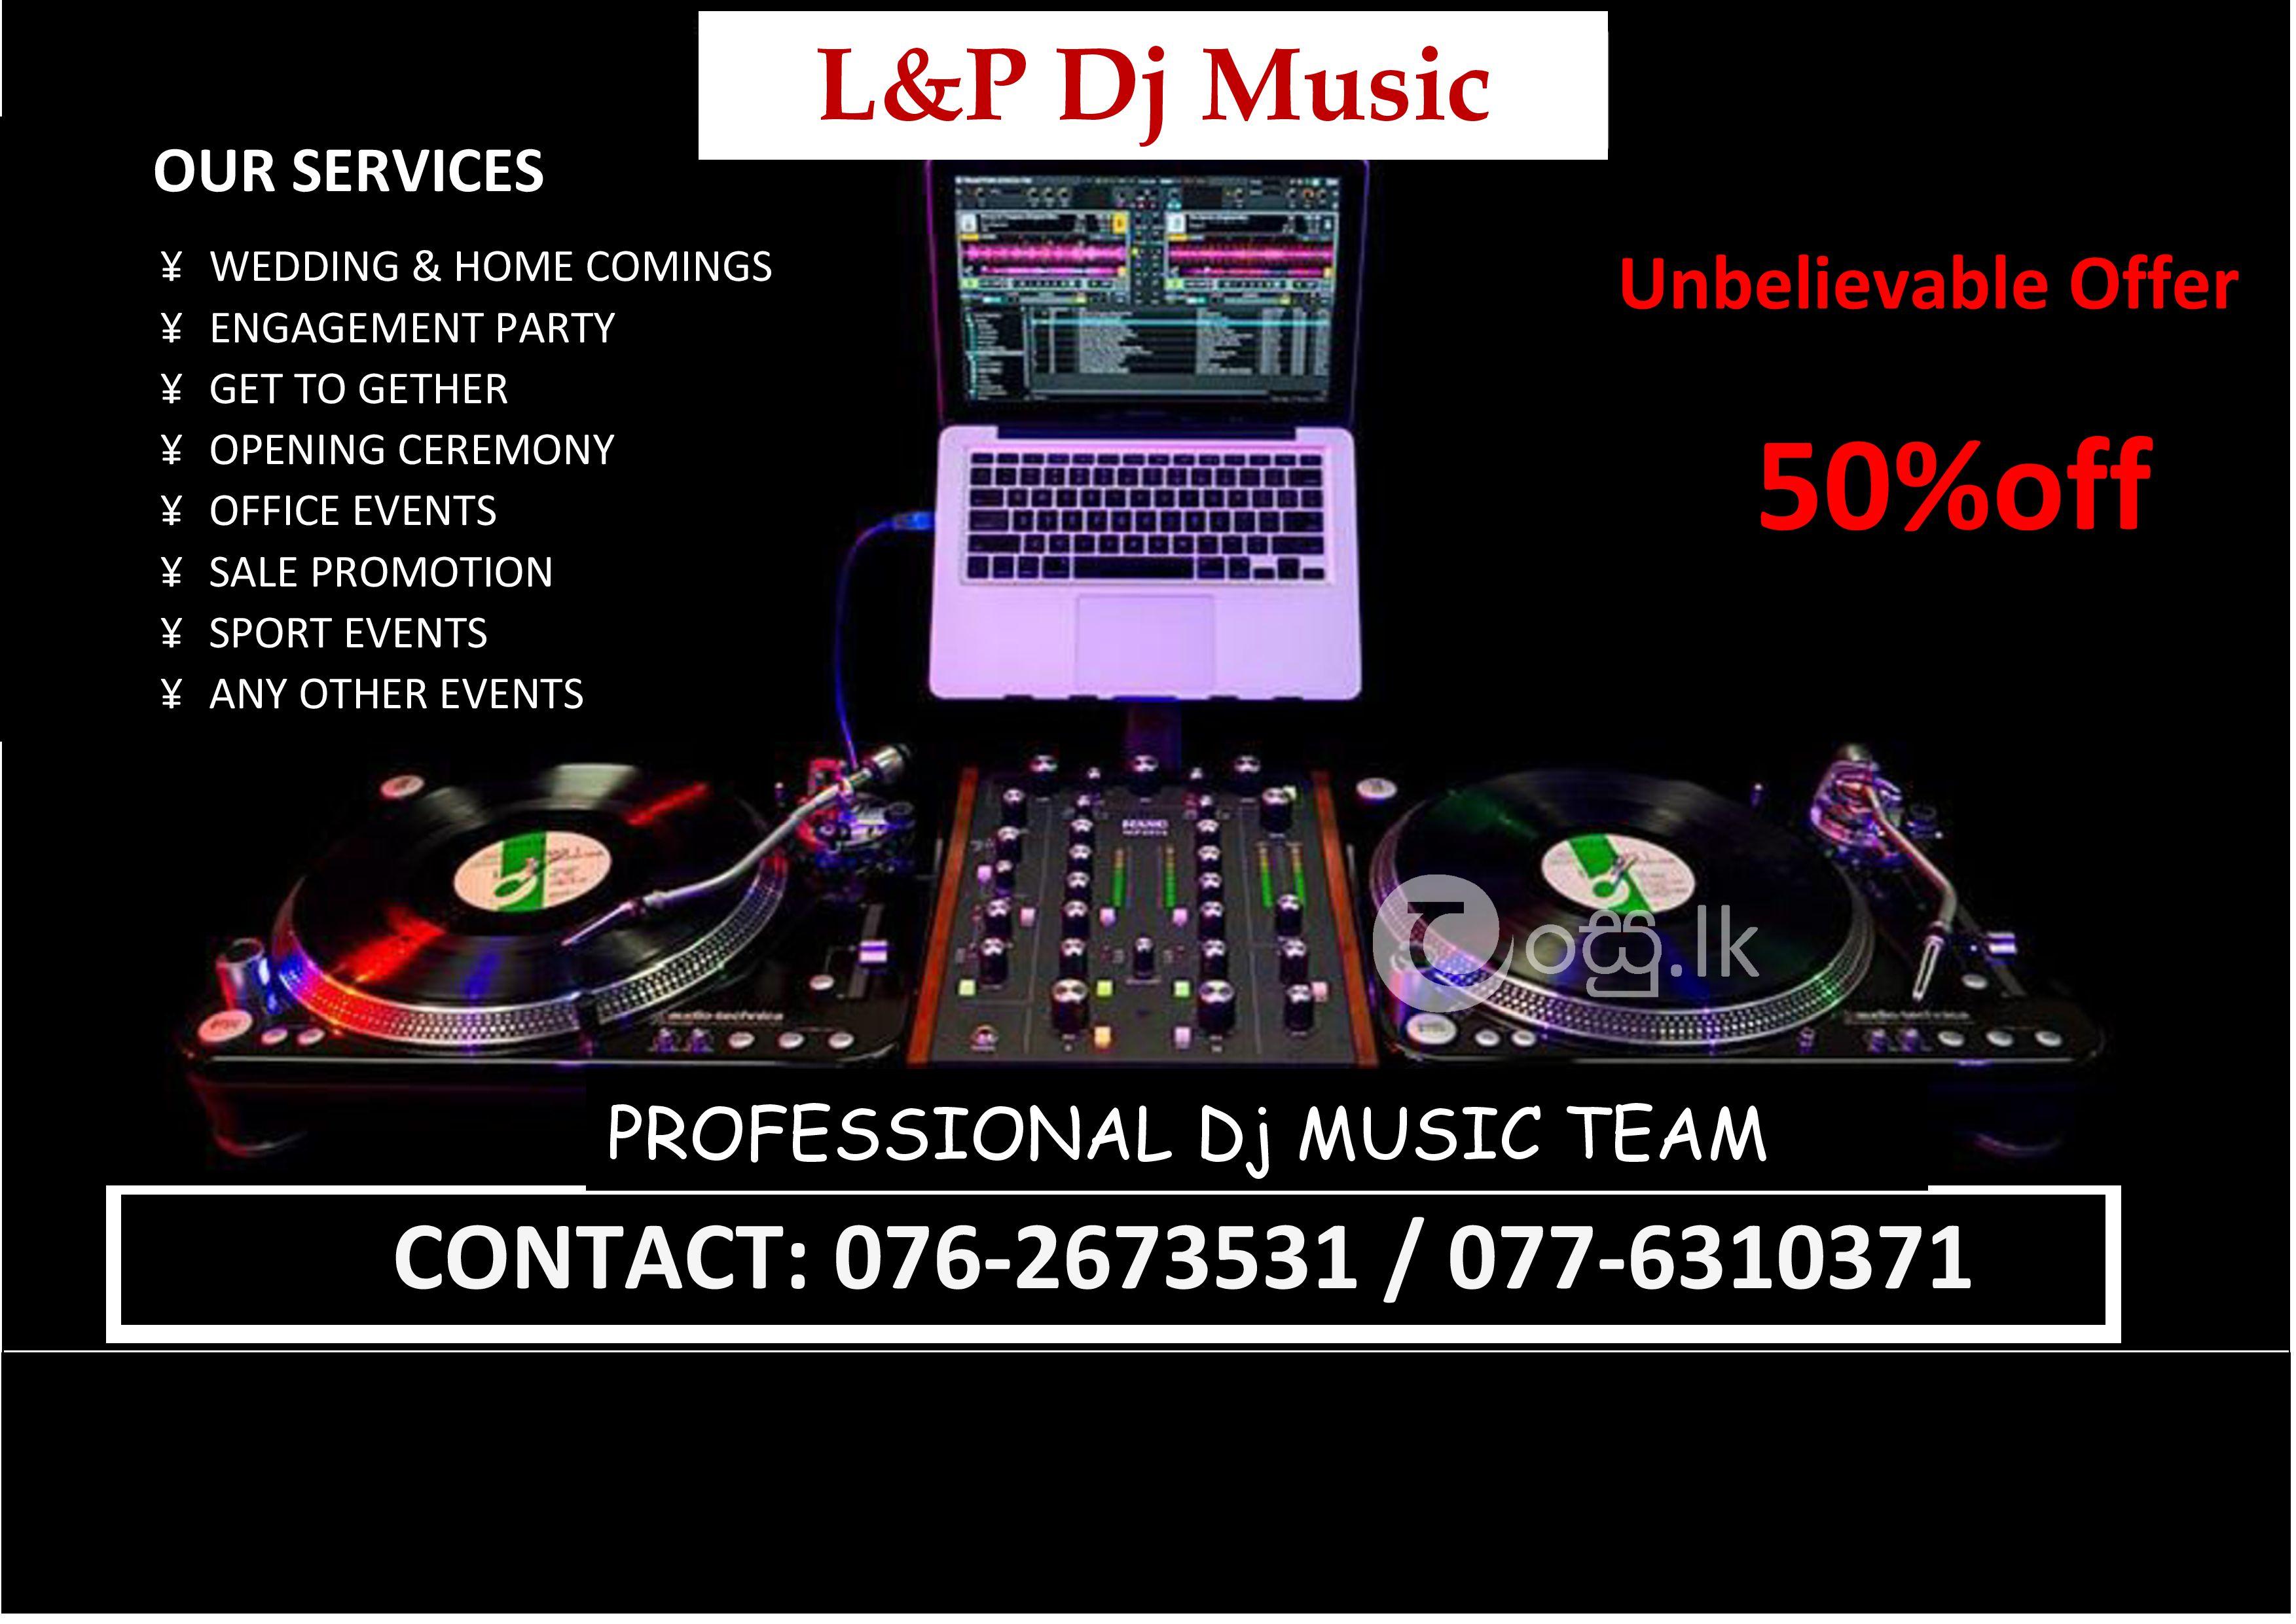 DJ MUSIC Events & Entertainment in Padukka